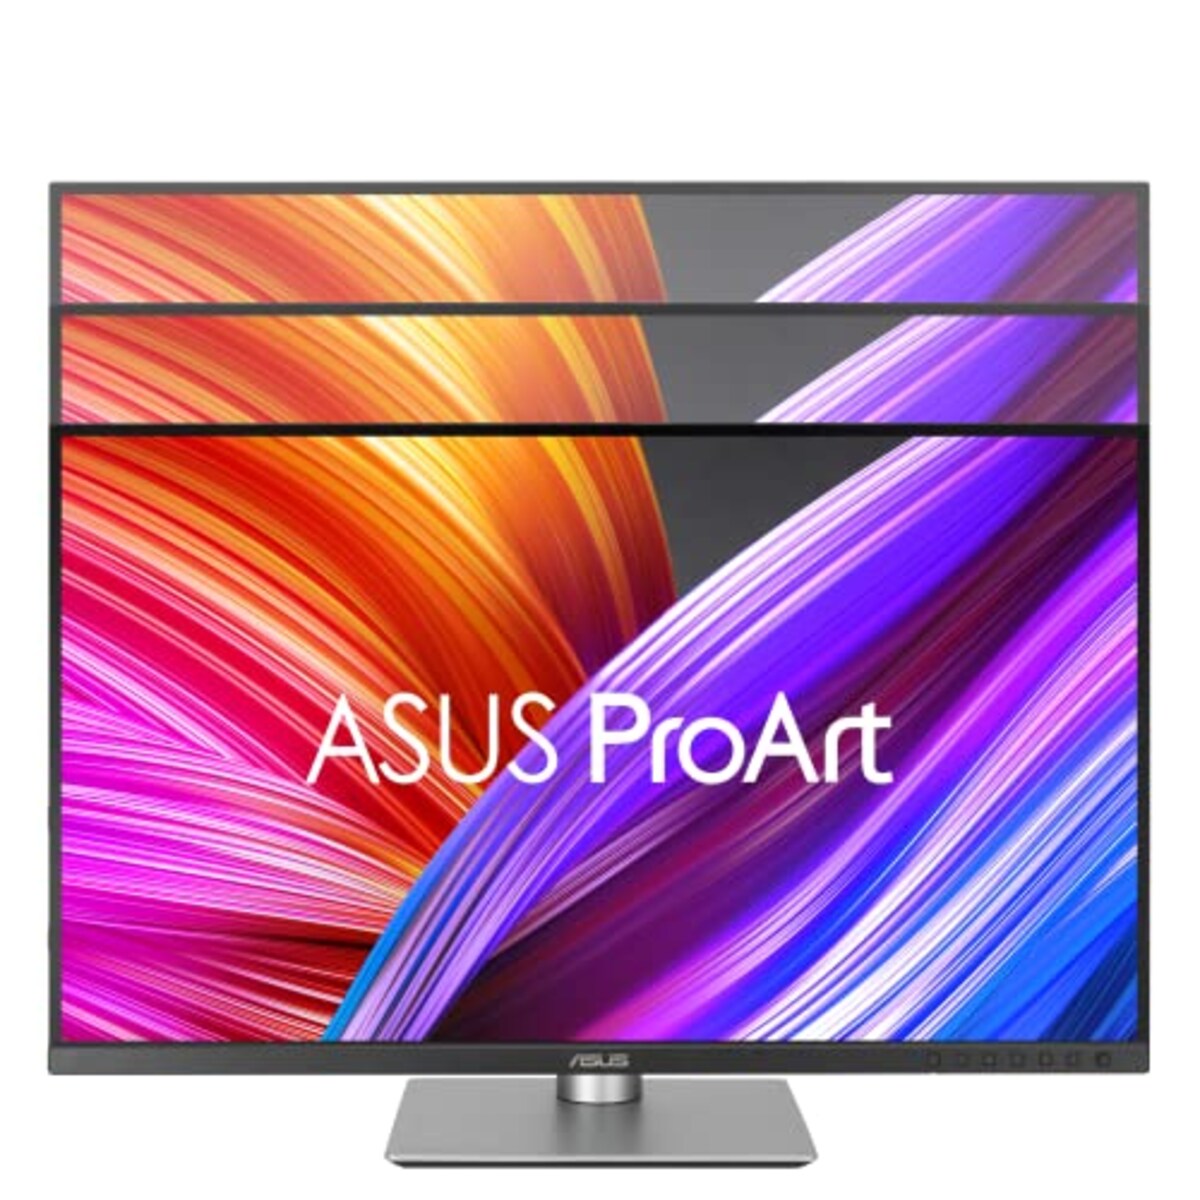  ASUS 4K モニター ProArt PA279CRV 27インチ/IPS/3年間無輝点保証/99% DCI-P3/99% Adobe RGB/USB-C PD 96W/色精度ΔE<2/VESA DisplayHDR 400/エルゴノミクススタンド/国内正規品画像14 